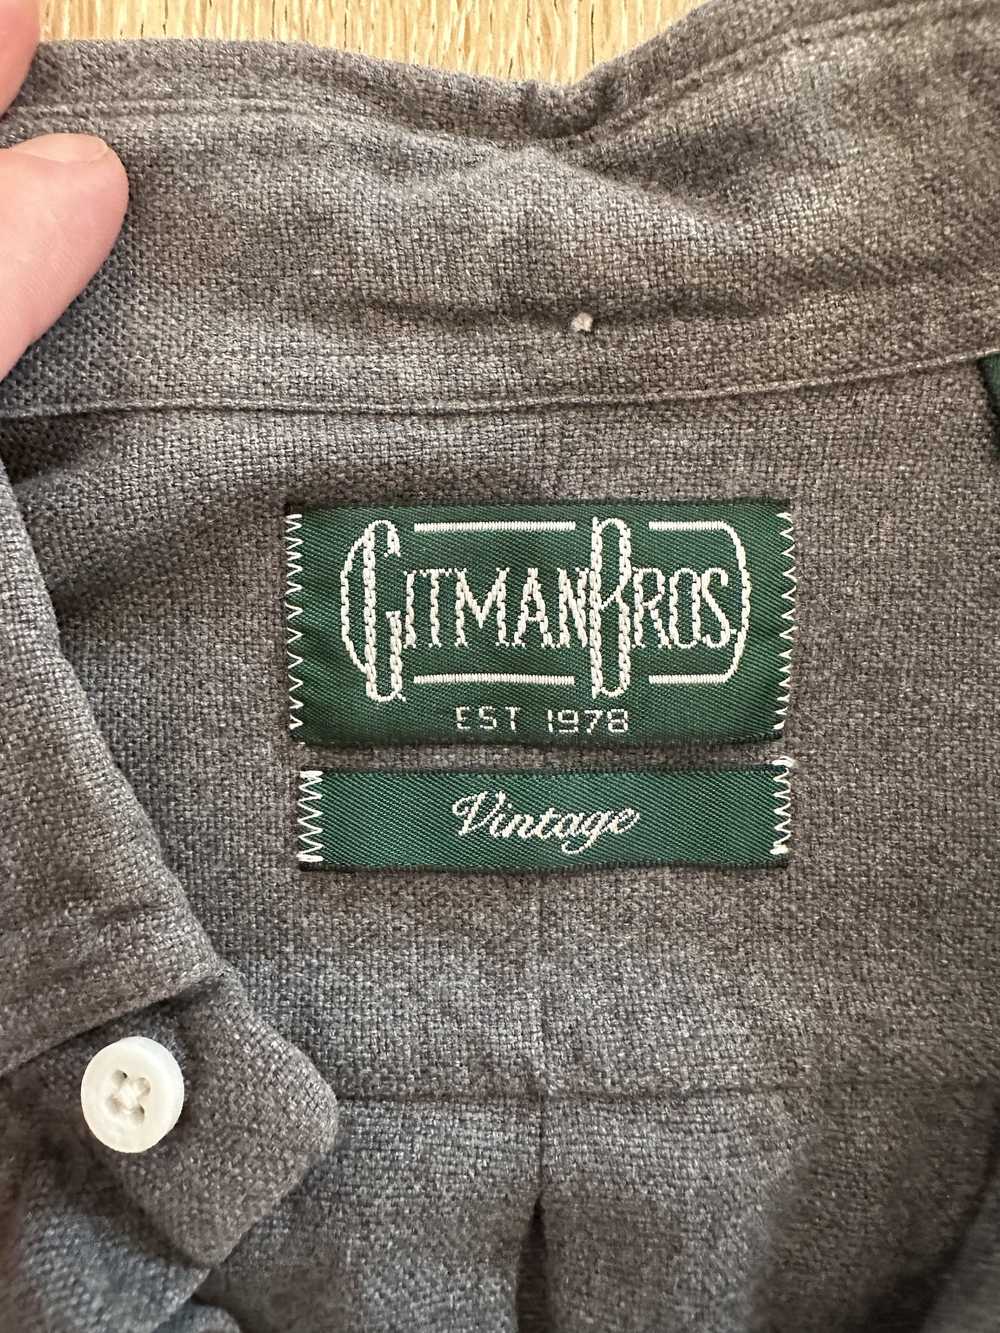 Gitman Bros. Vintage Cotton Button-Up - image 3